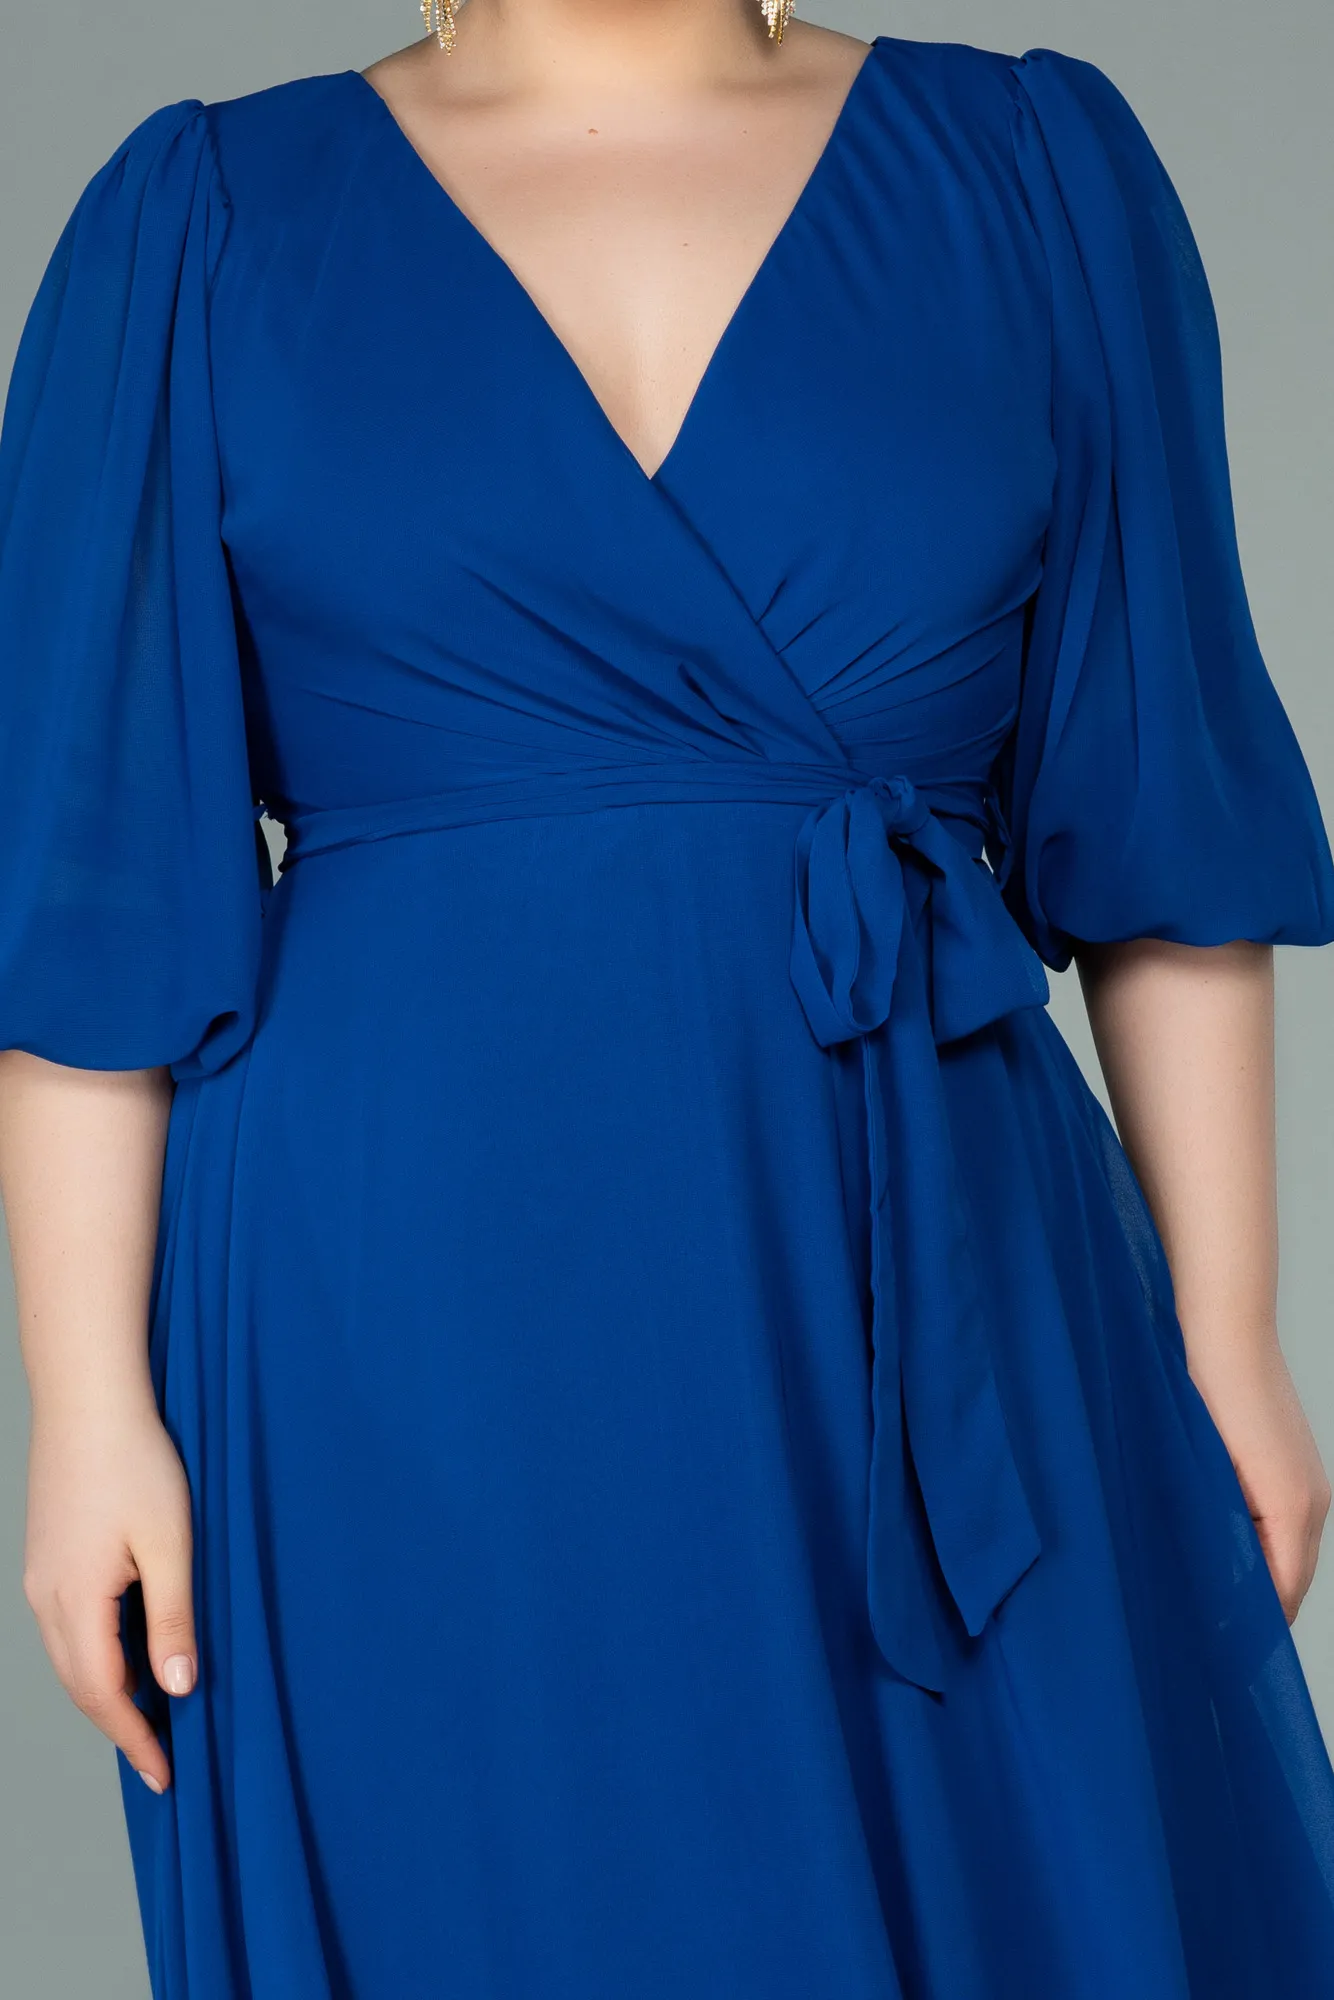 Sax Blue-Midi Chiffon Oversized Evening Dress ABK1083